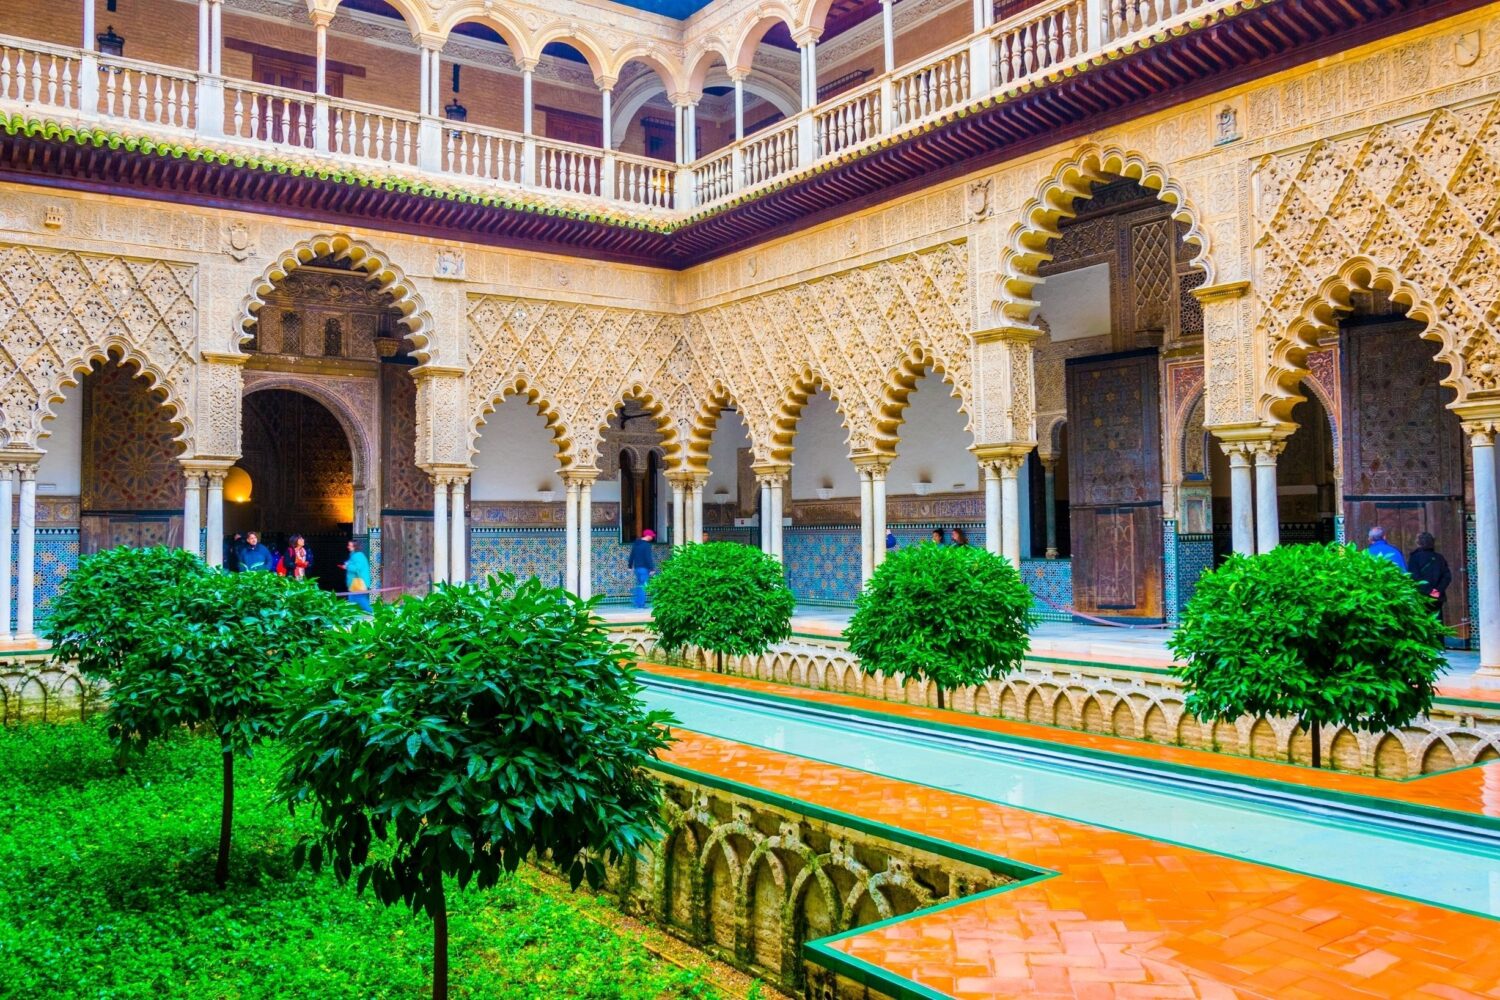 11Visit the Real Alcázar of Seville